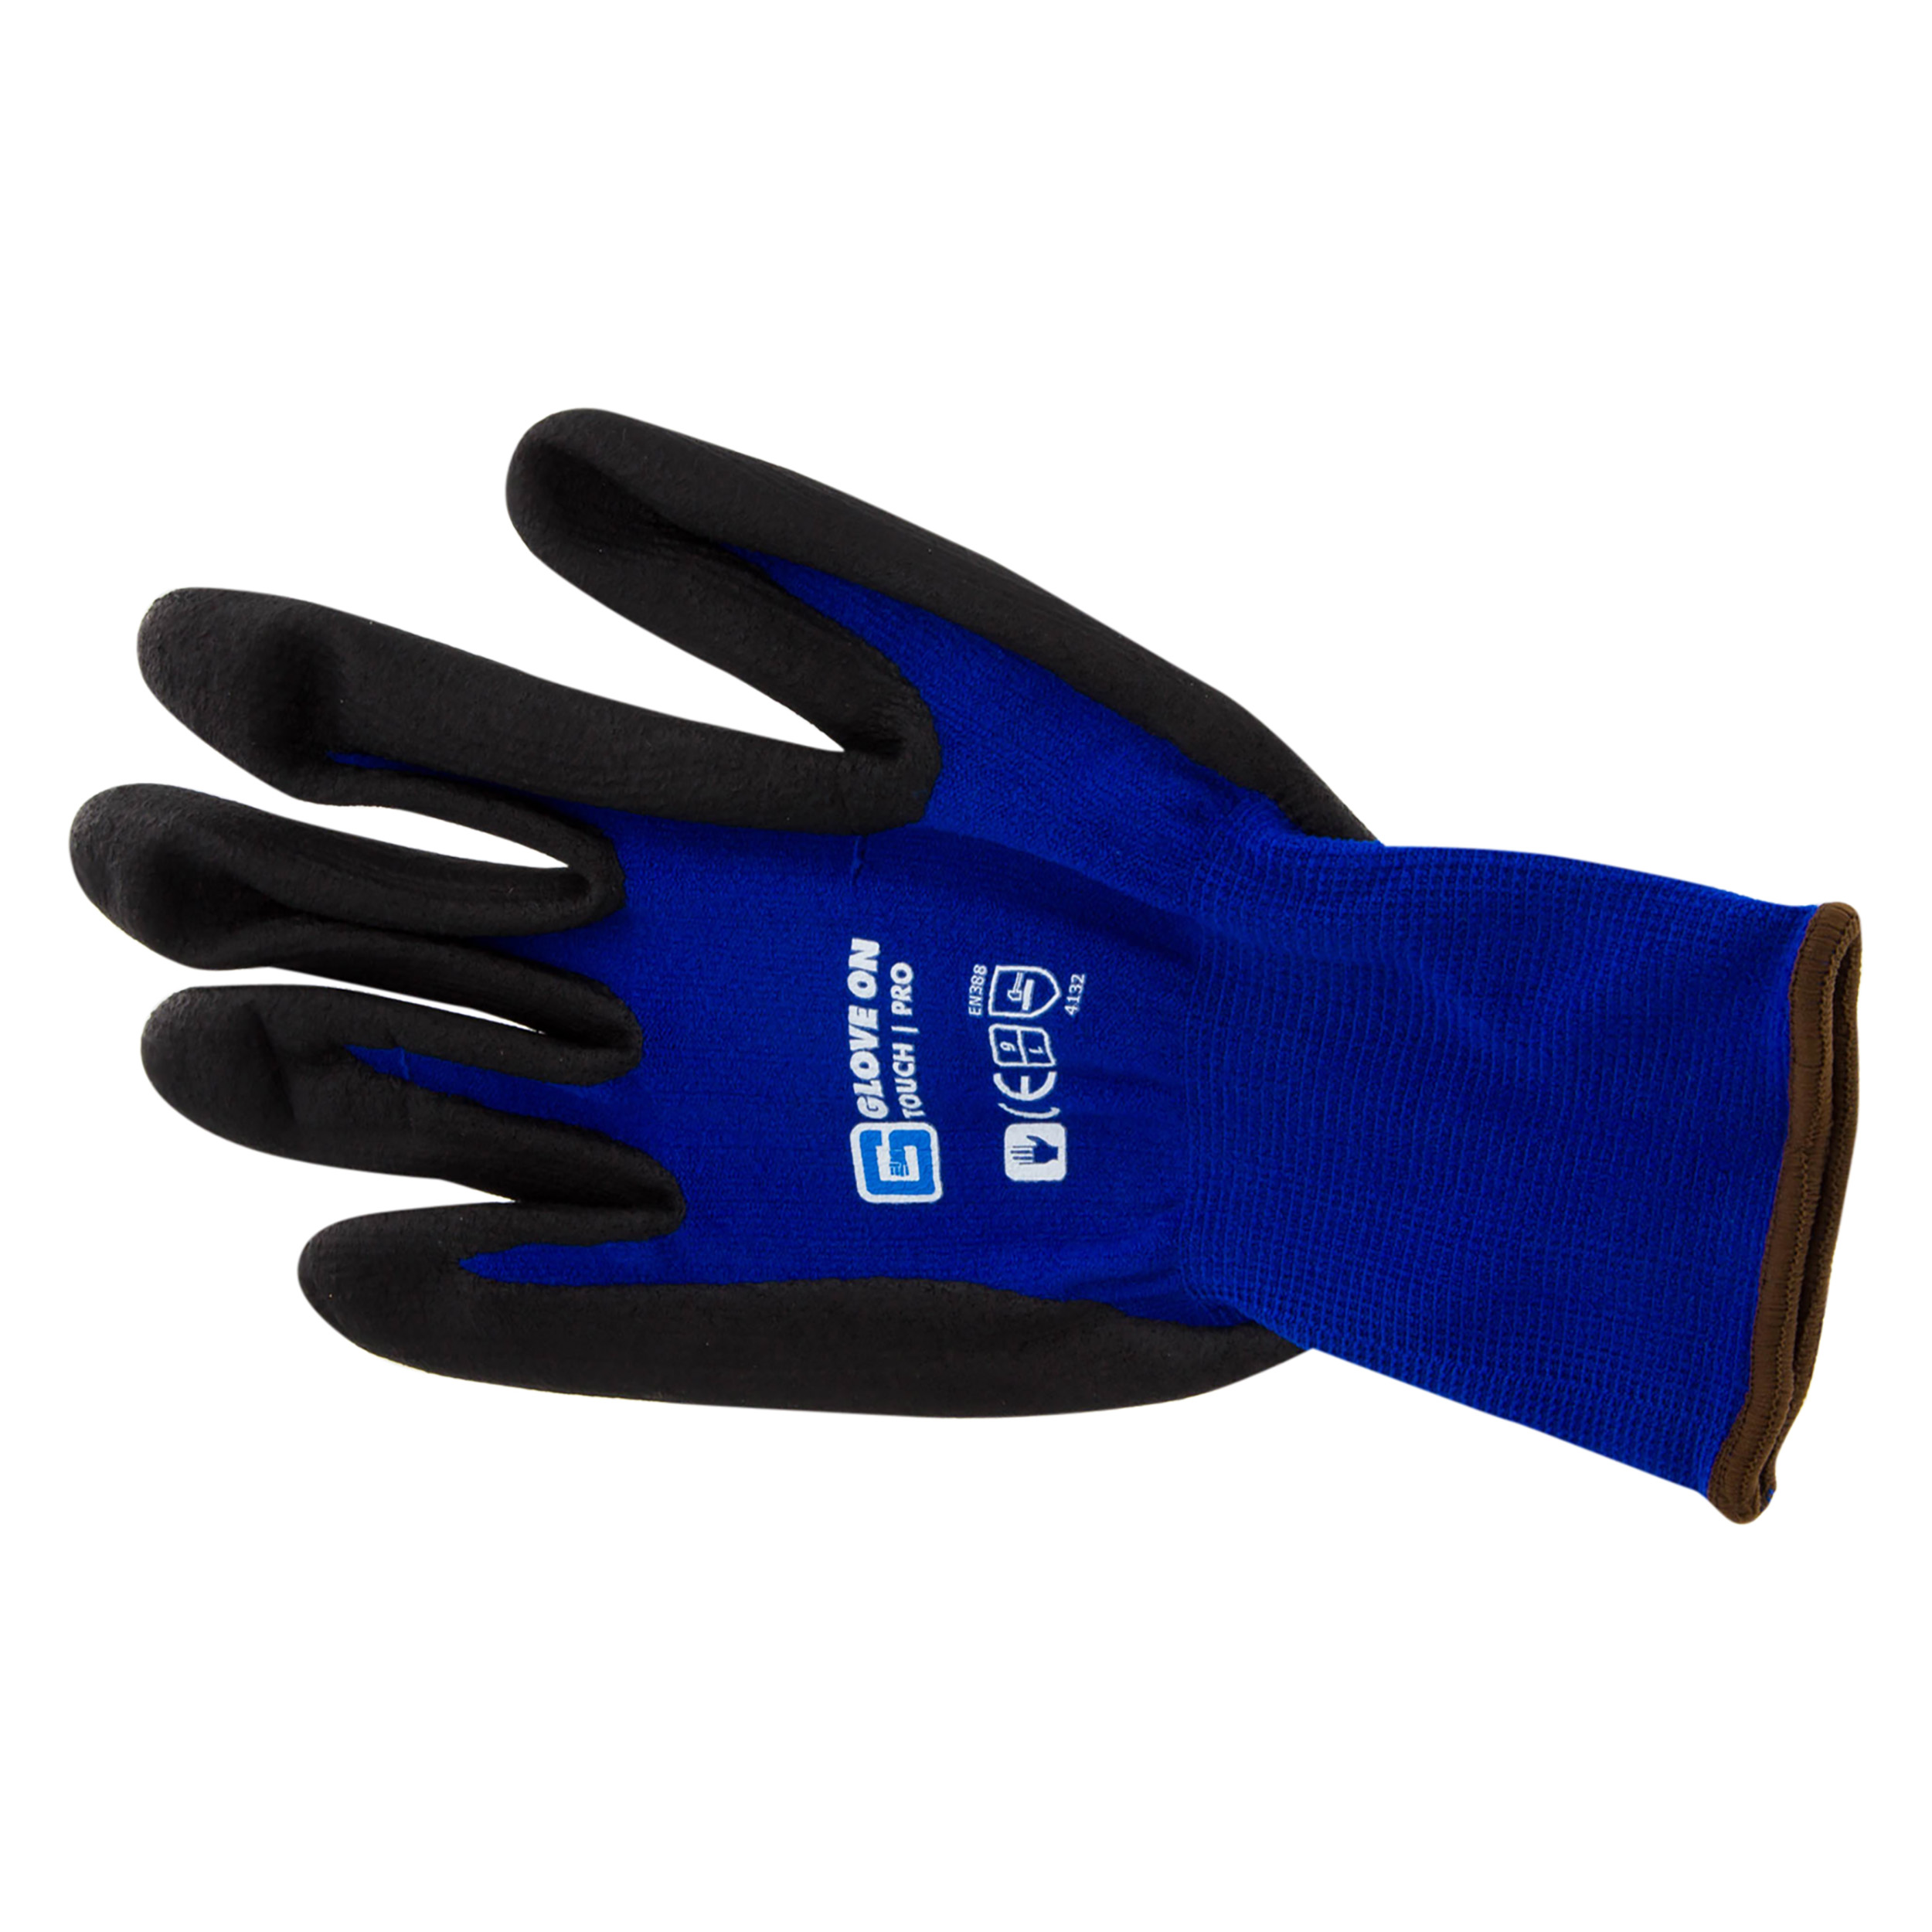 21.080.17 Glove On Touch werkhandschoen touch pro - L